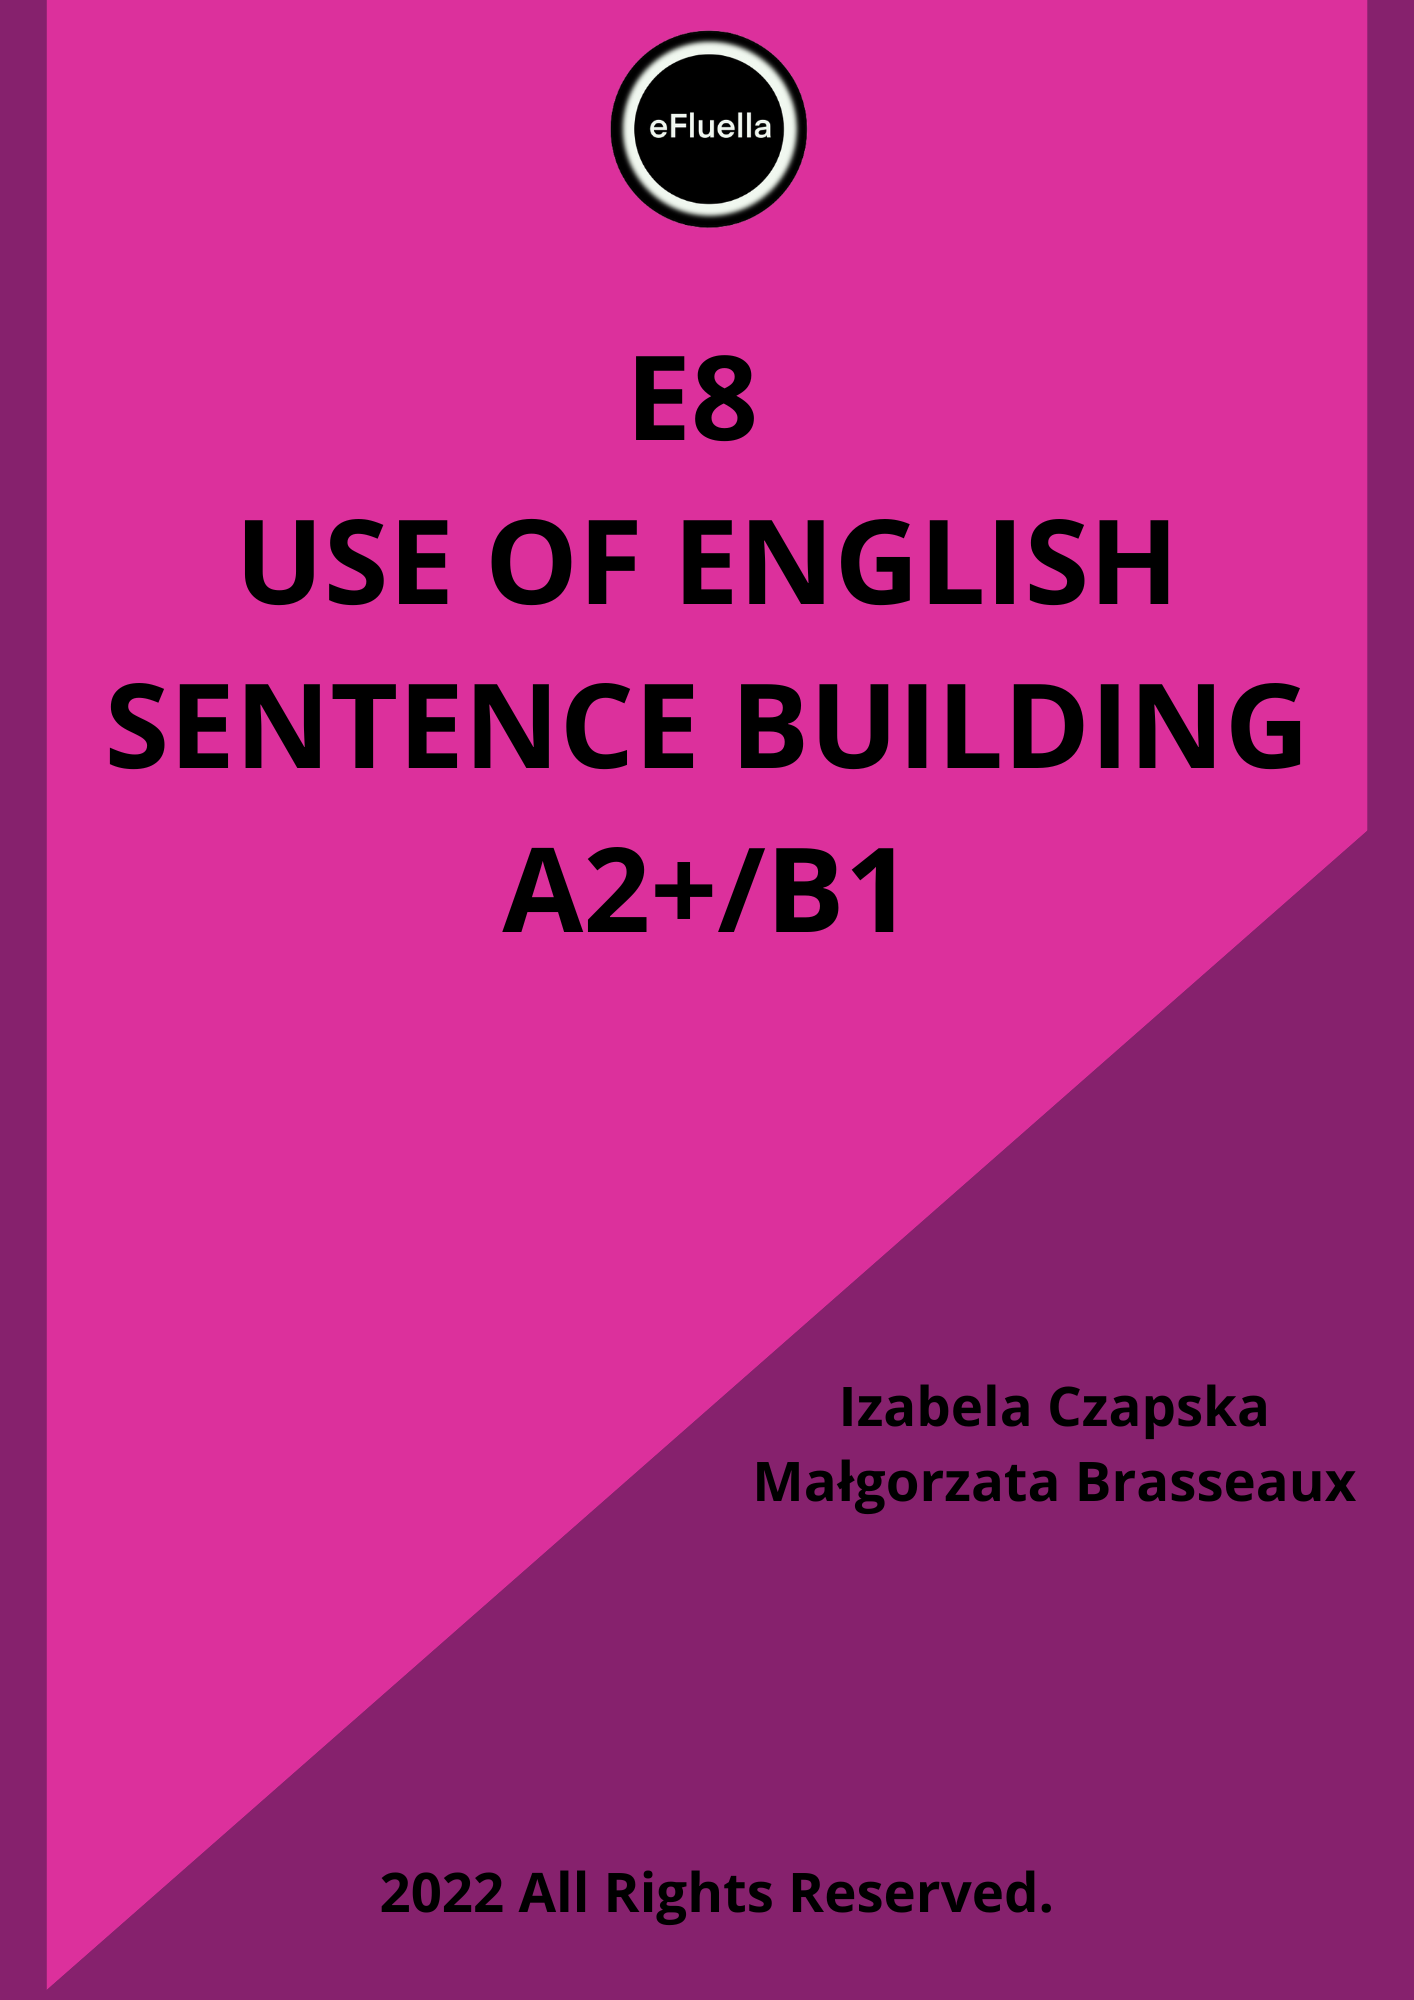 EXERCISES SENTENCE BUILDING E8 USE OF ENGLISH